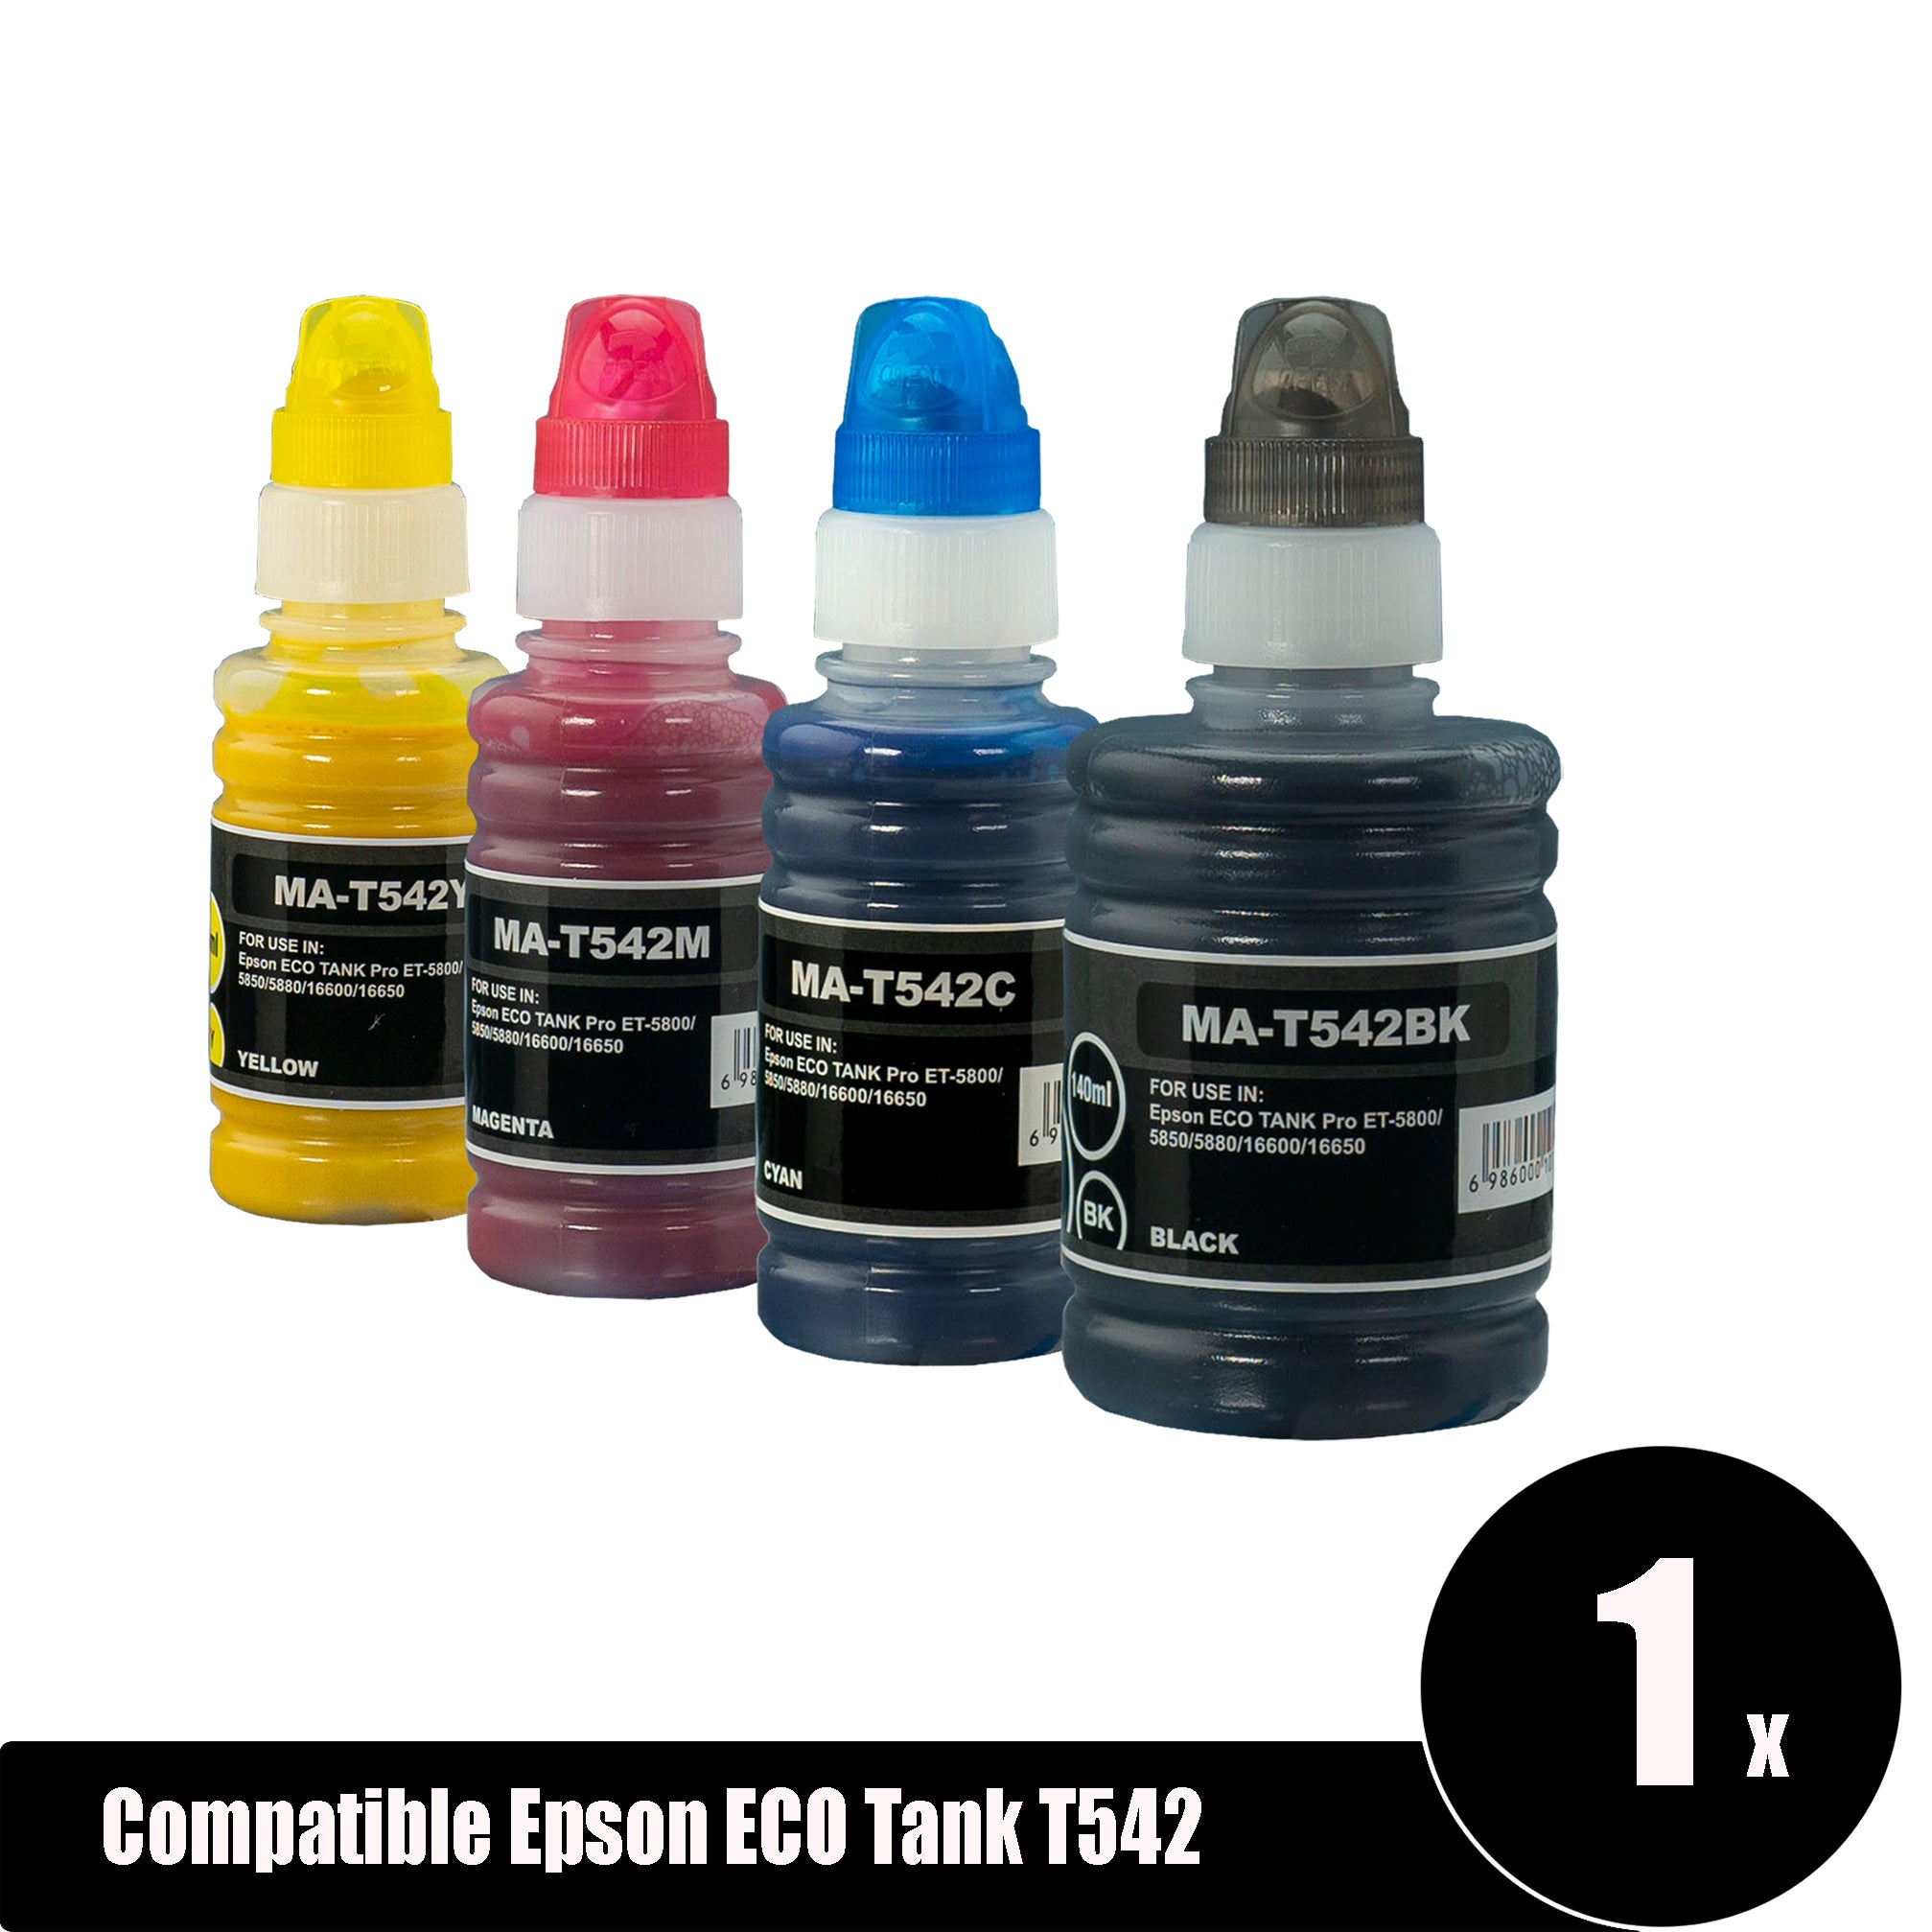 Compatible Epson ECO Tank T542 Ink (BK+C+M+Y)